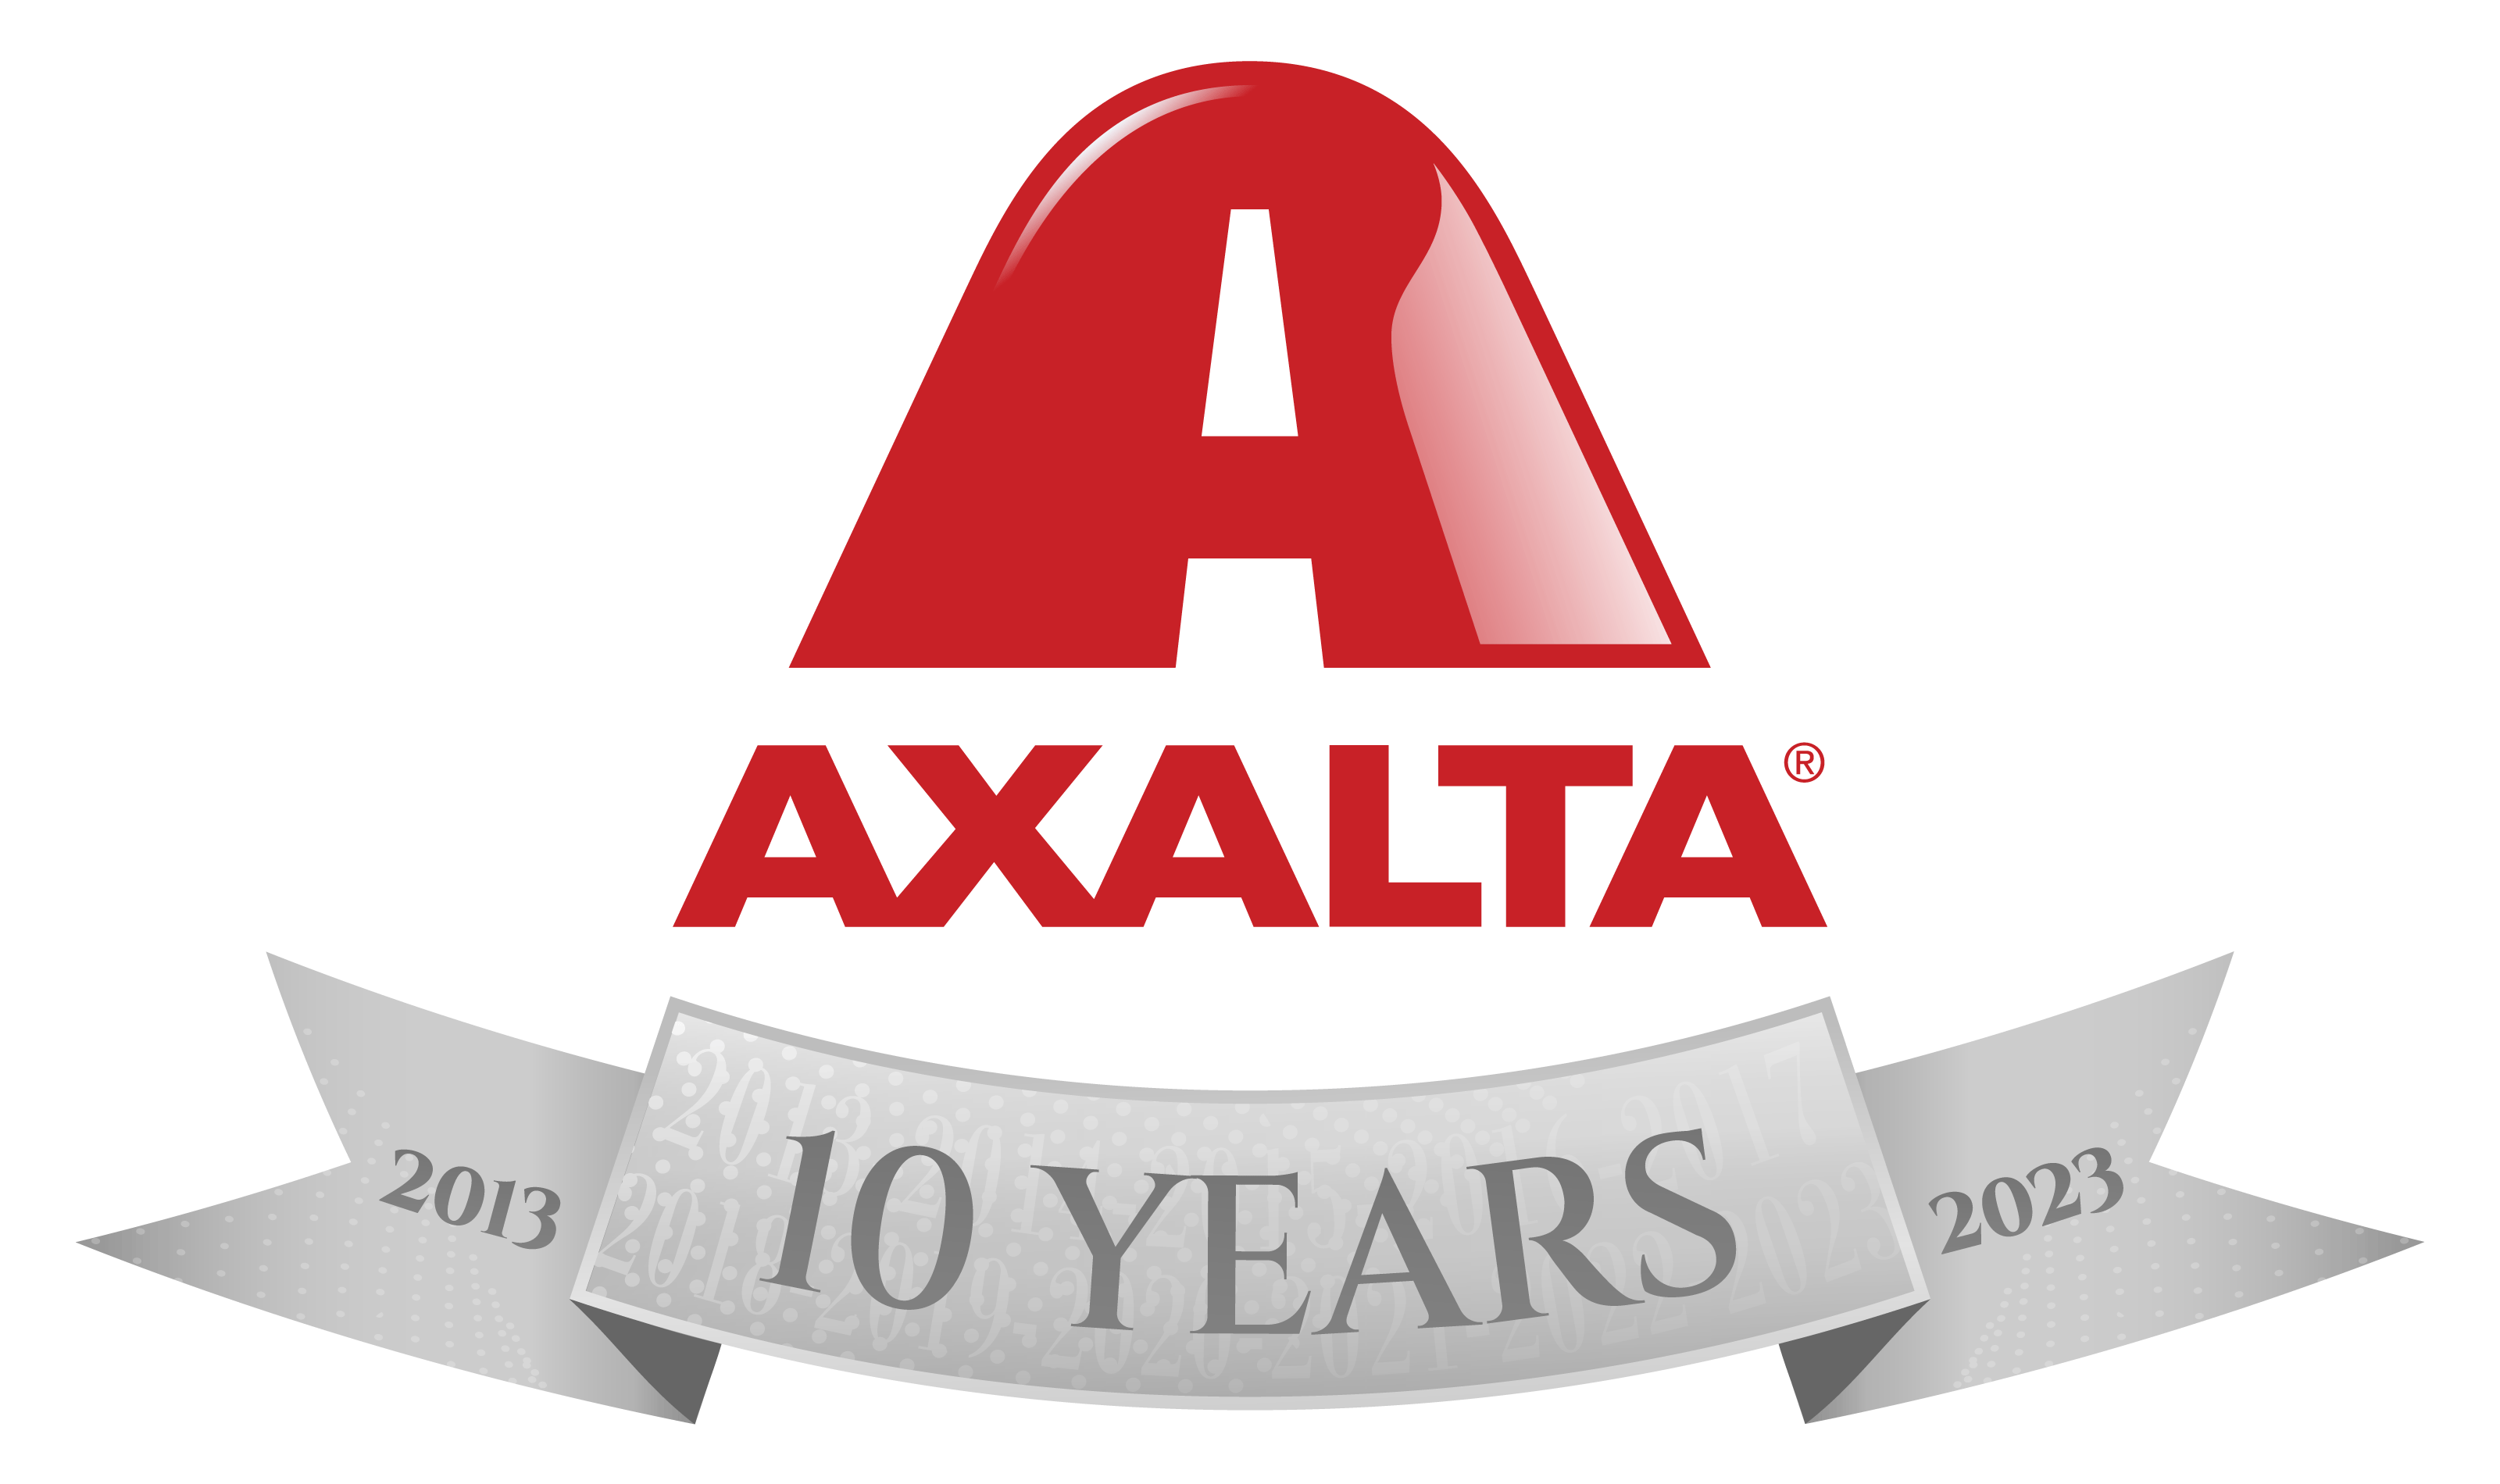 Axalta_10YearAnniversary_logo_RGB.png